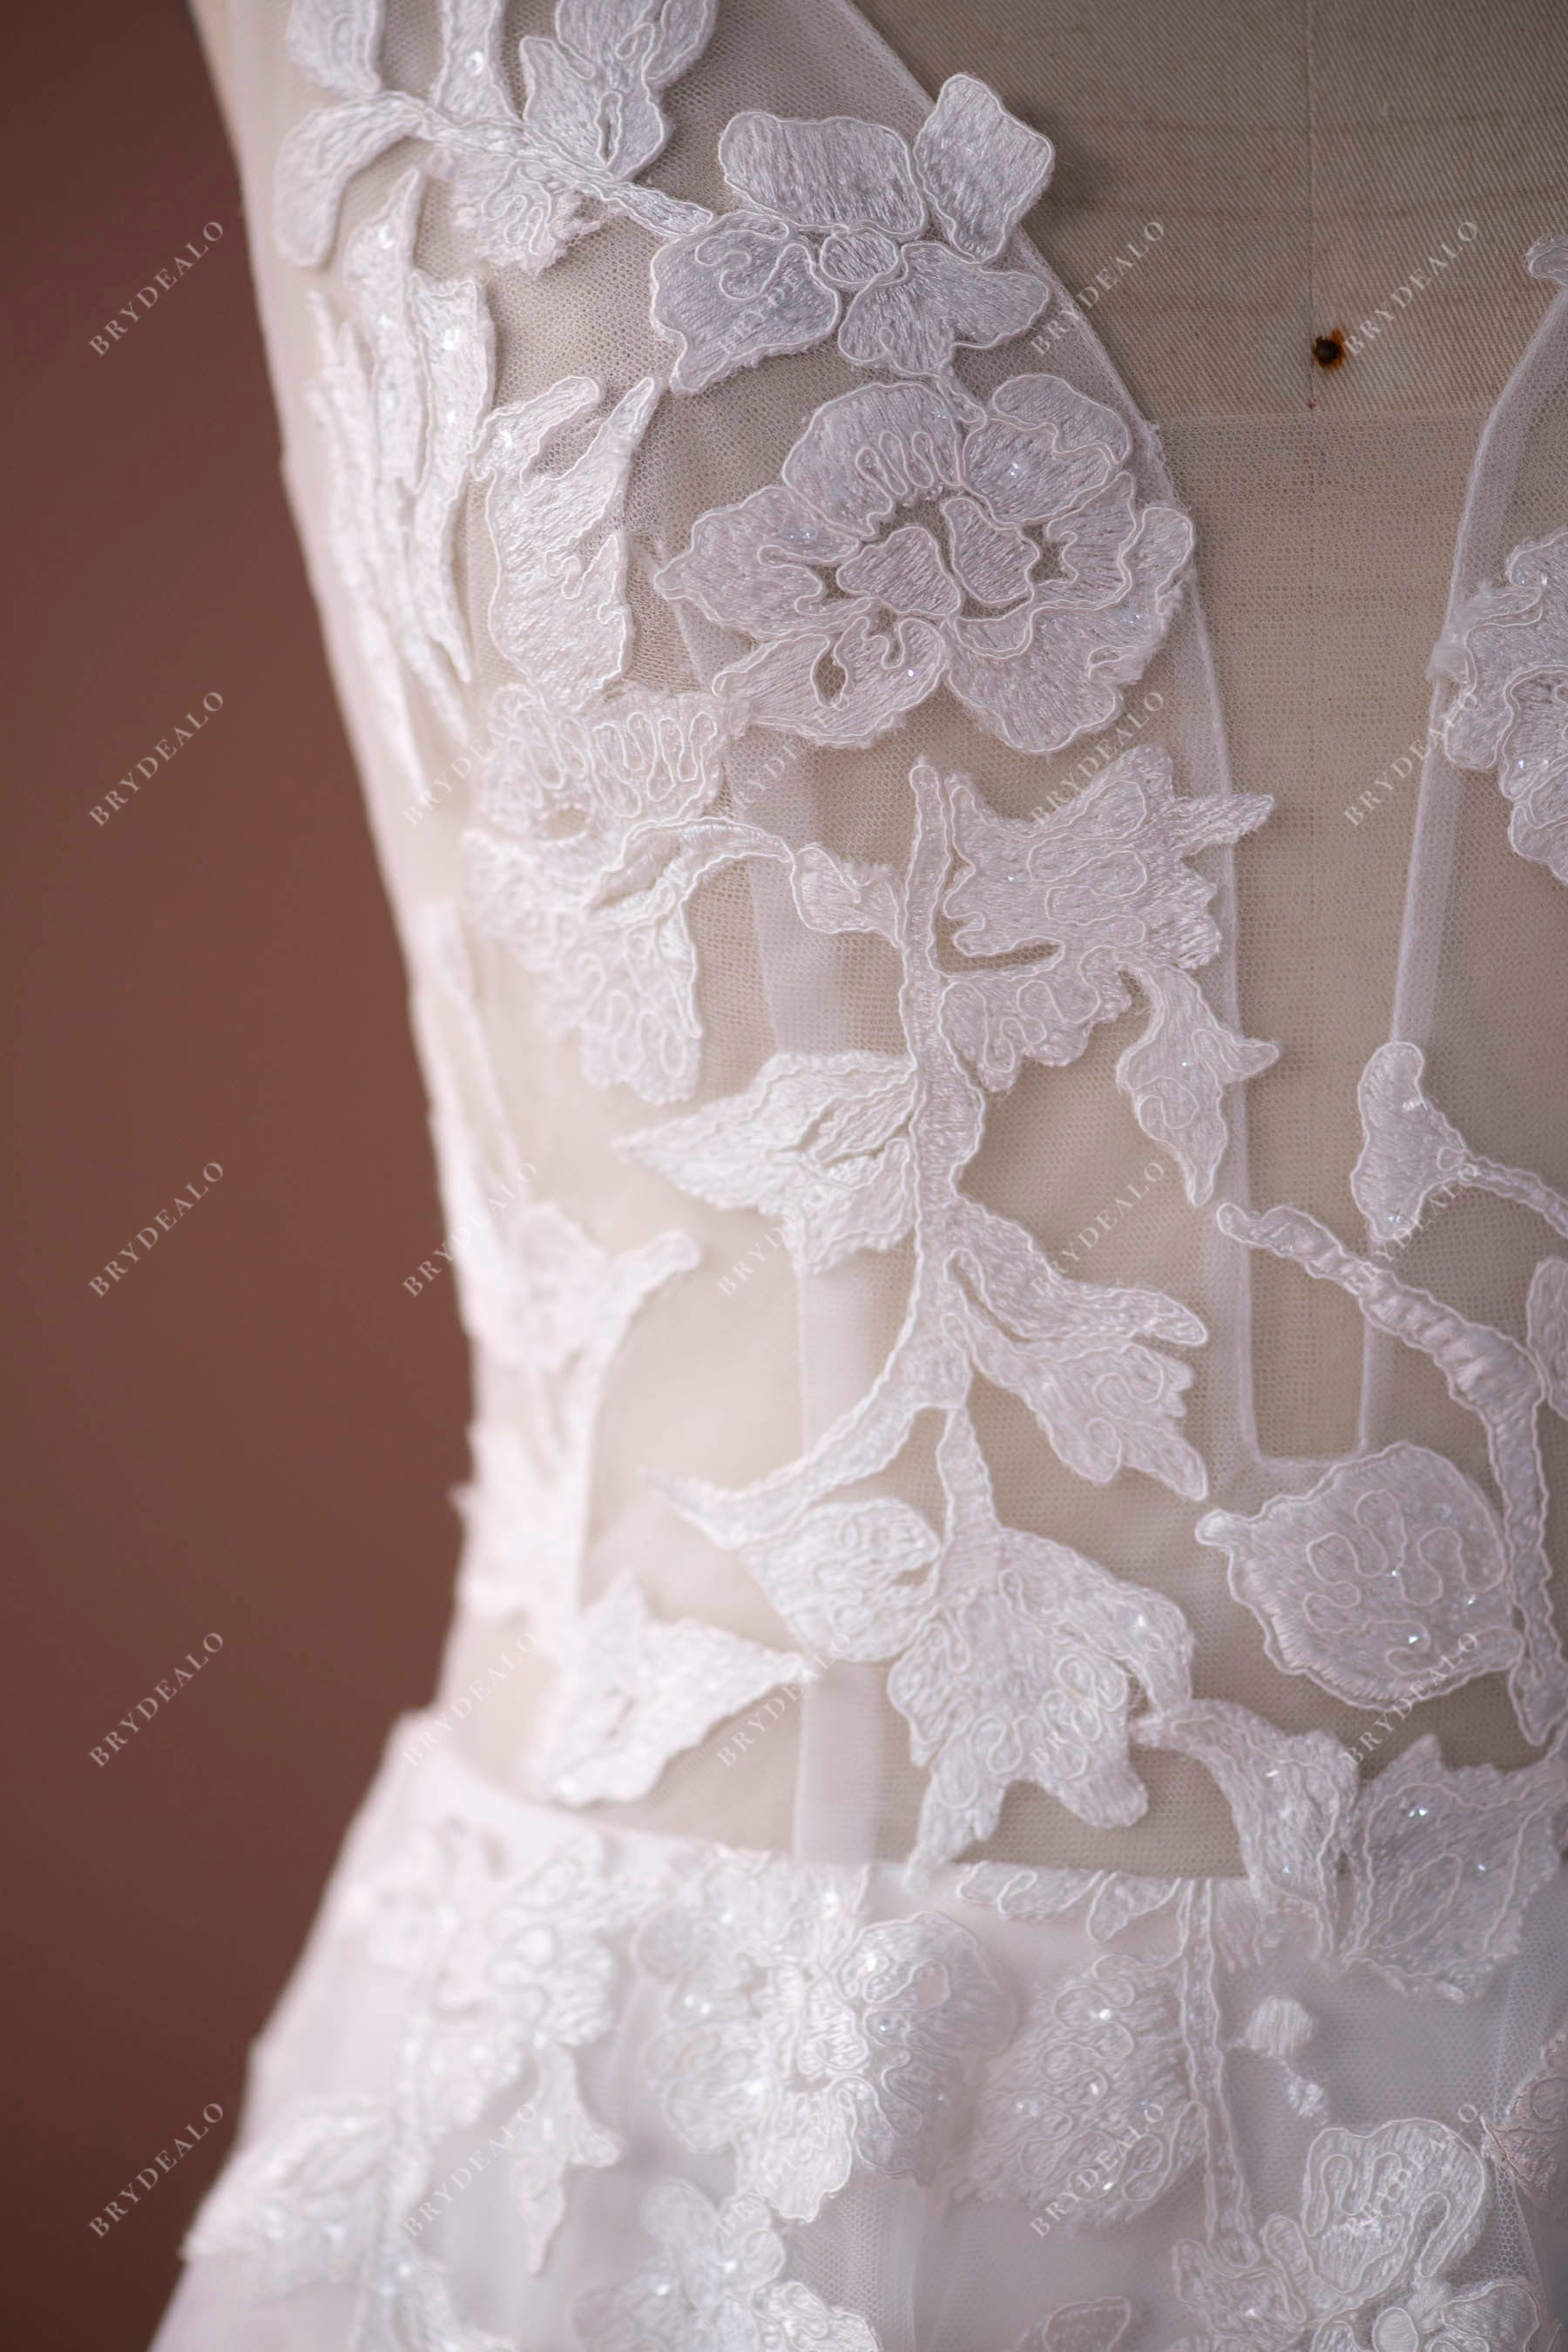 shimmery flower lace wedding dress